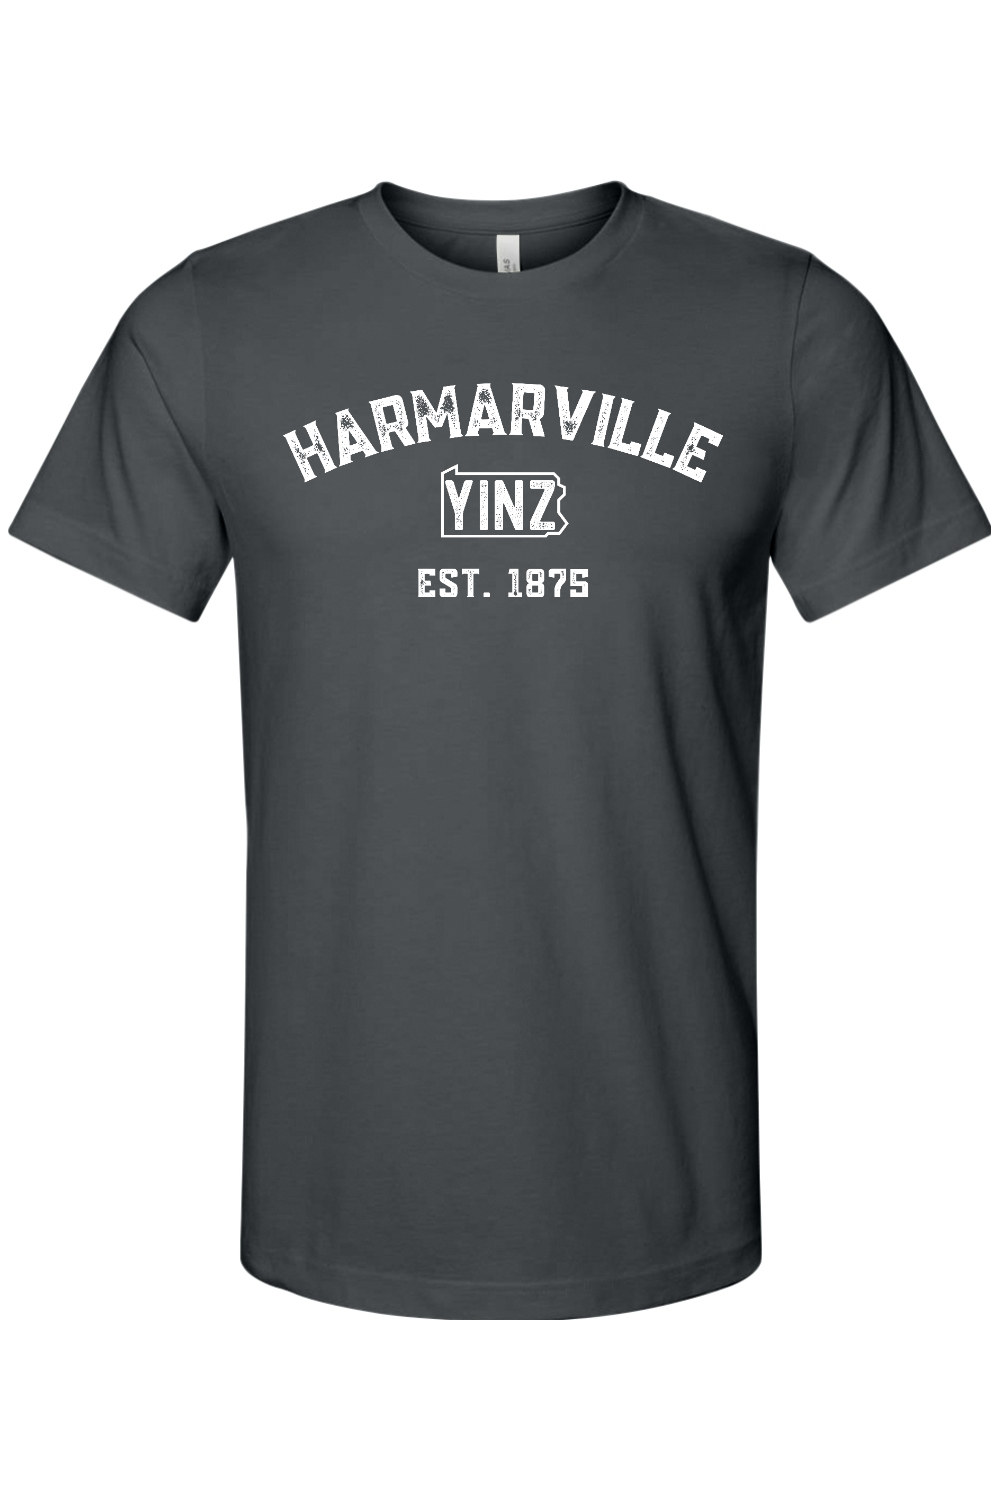 Harmarville Yinzylvania - Yinzylvania